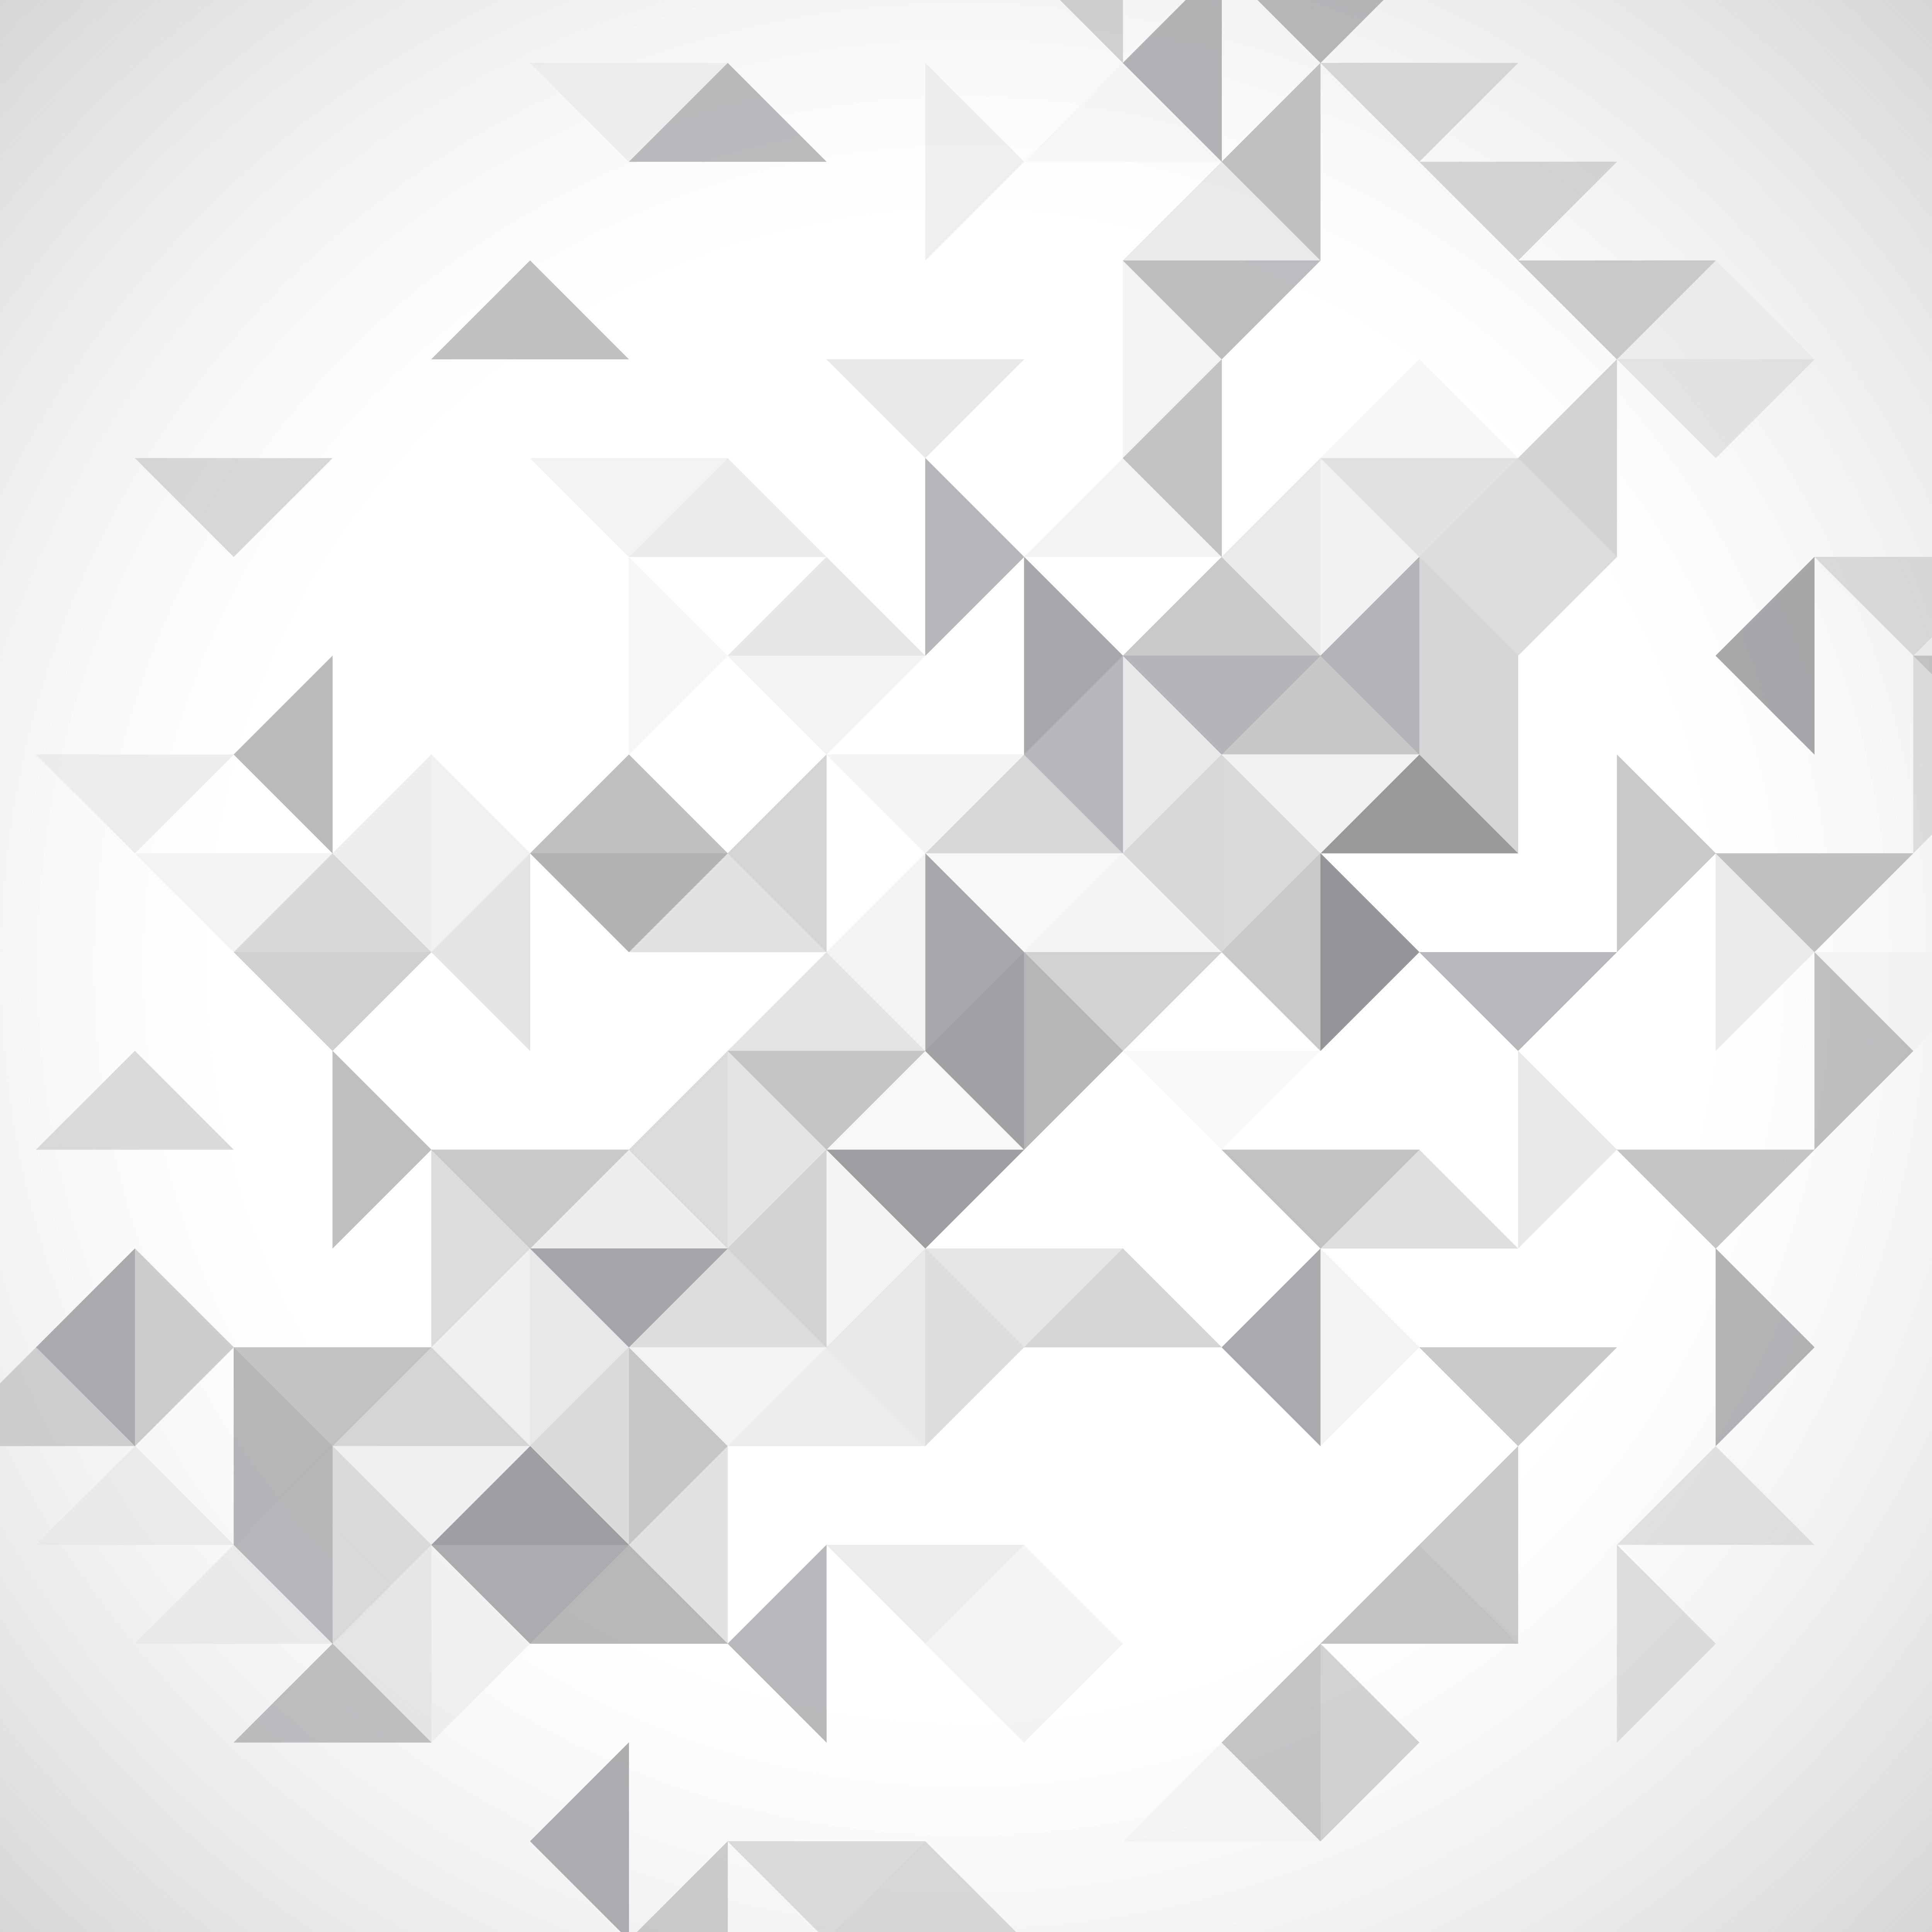 Monochrome Background Free Vector Art - (3,824 Free Downloads)